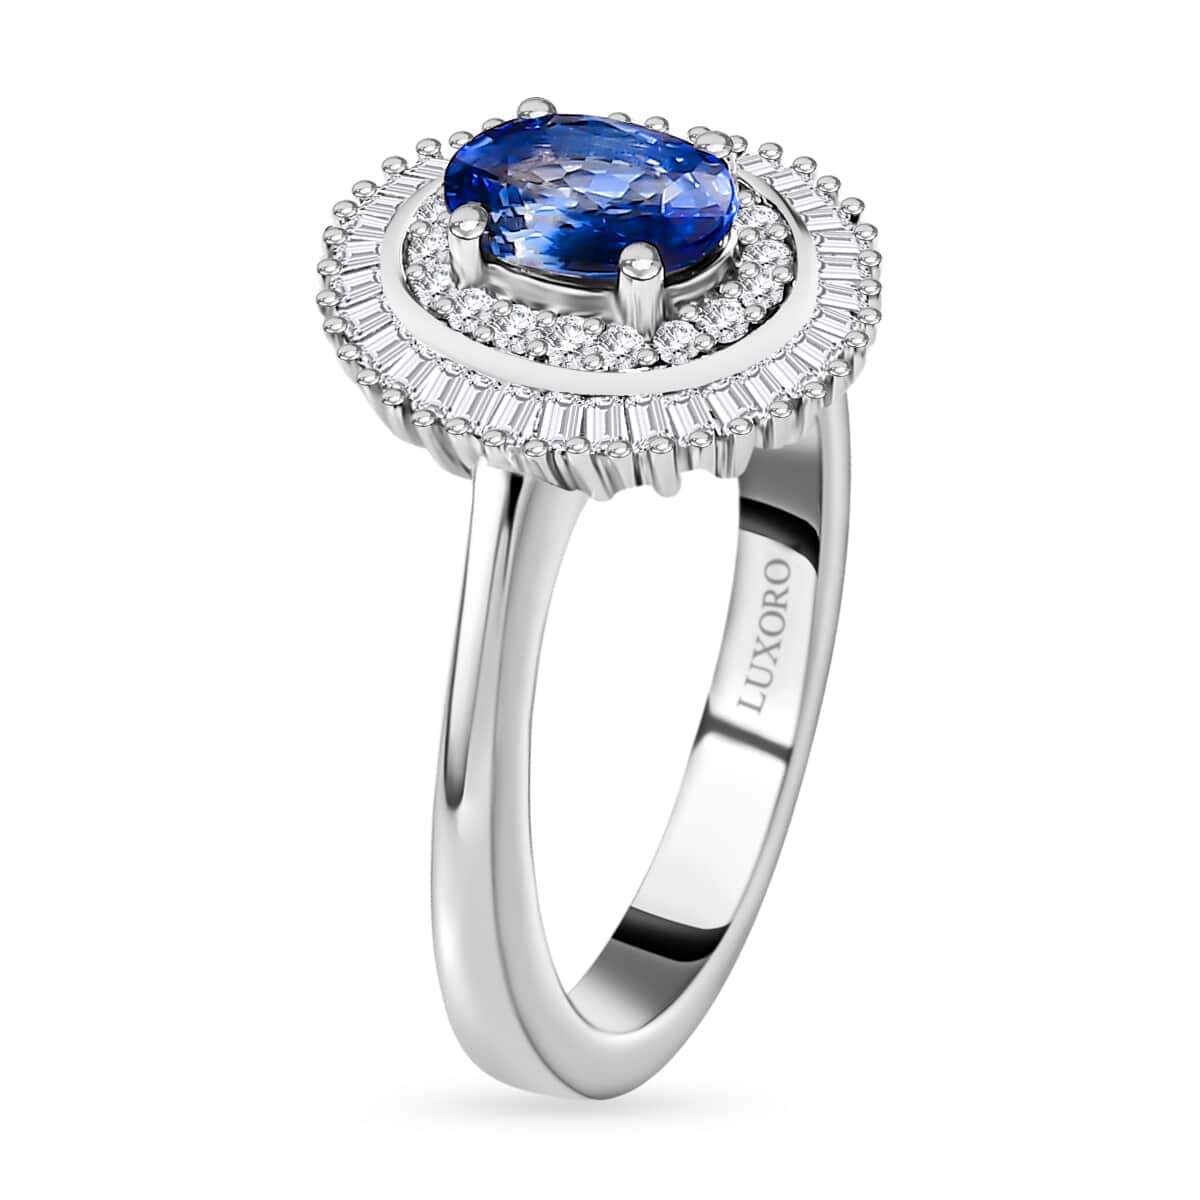 Luxoro 10K White Gold Premium Ceylon Blue Sapphire and Diamond Double Halo Ring (Size 6.0) 1.35 ctw image number 3